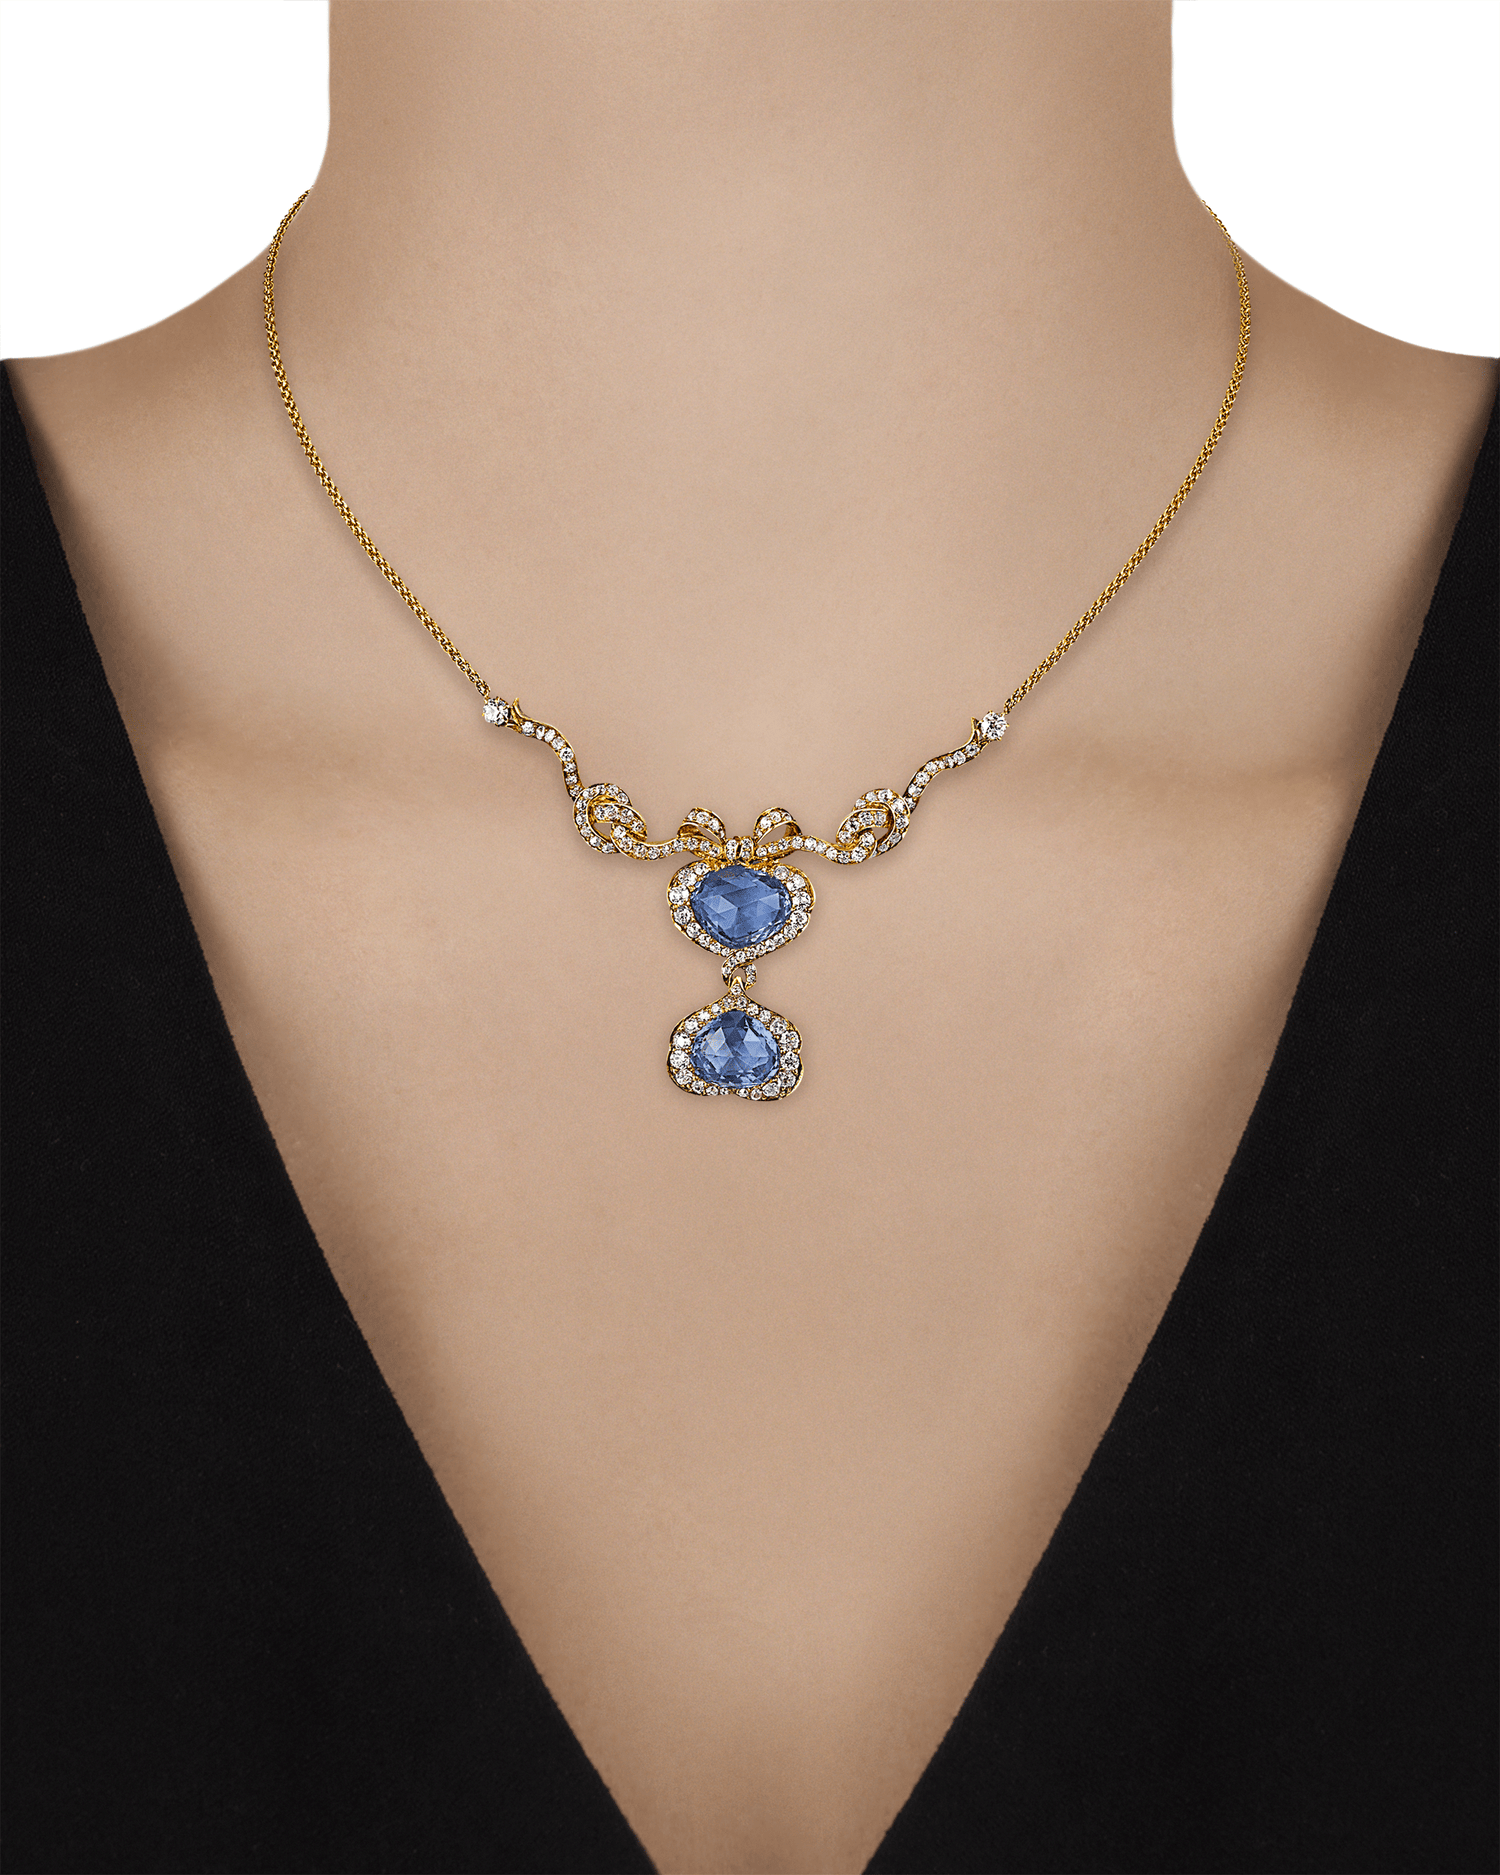 Tiffany & Co. Kashmir Sapphire Necklace, 10.25 Carats